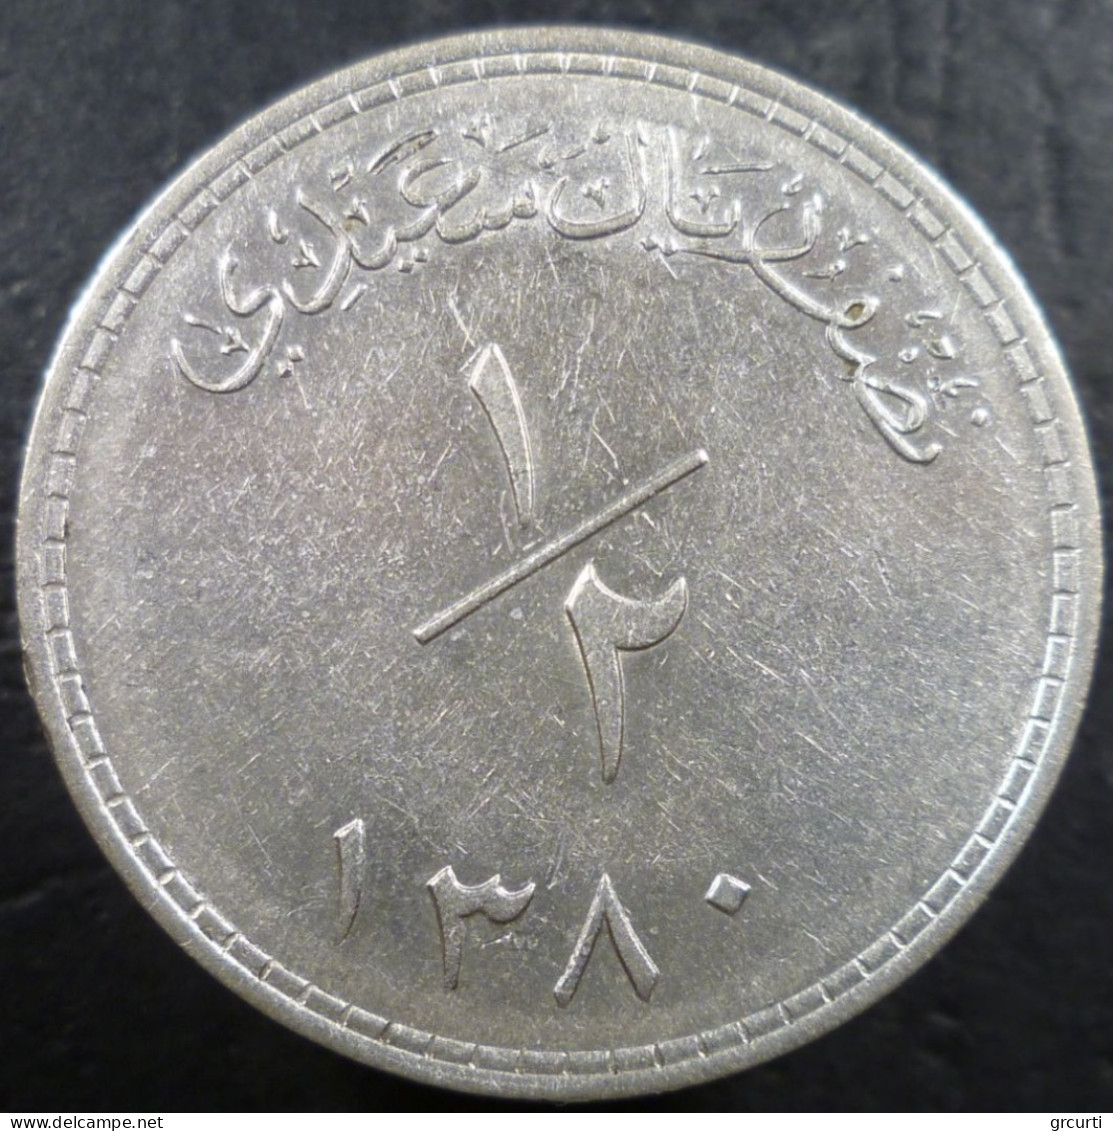 Oman - ½ Rial 1960 - KM# 34 - Oman